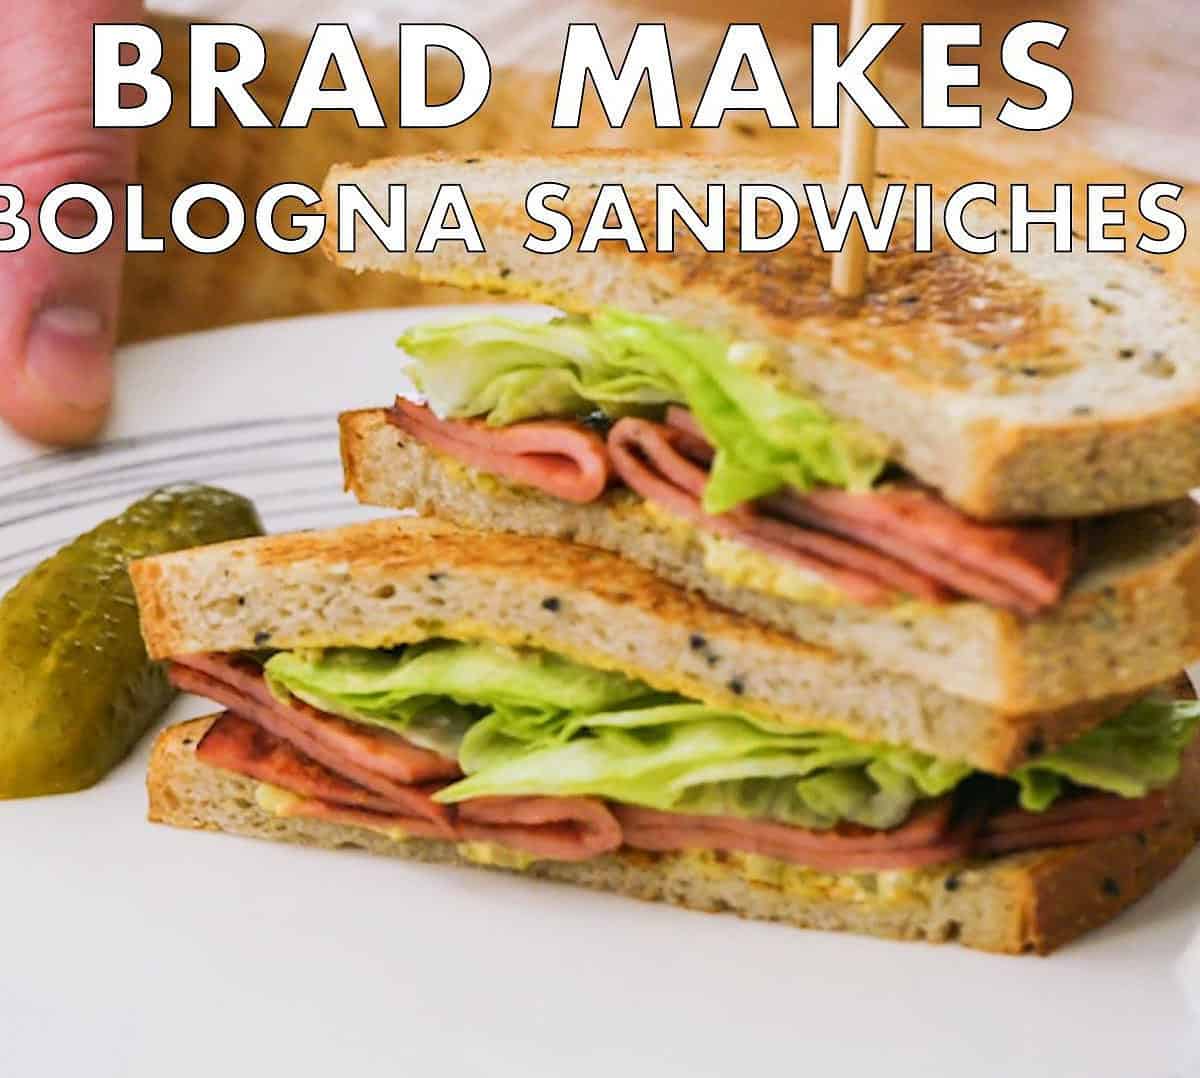  When life gives you vegetarian bologna, make a sandwich!